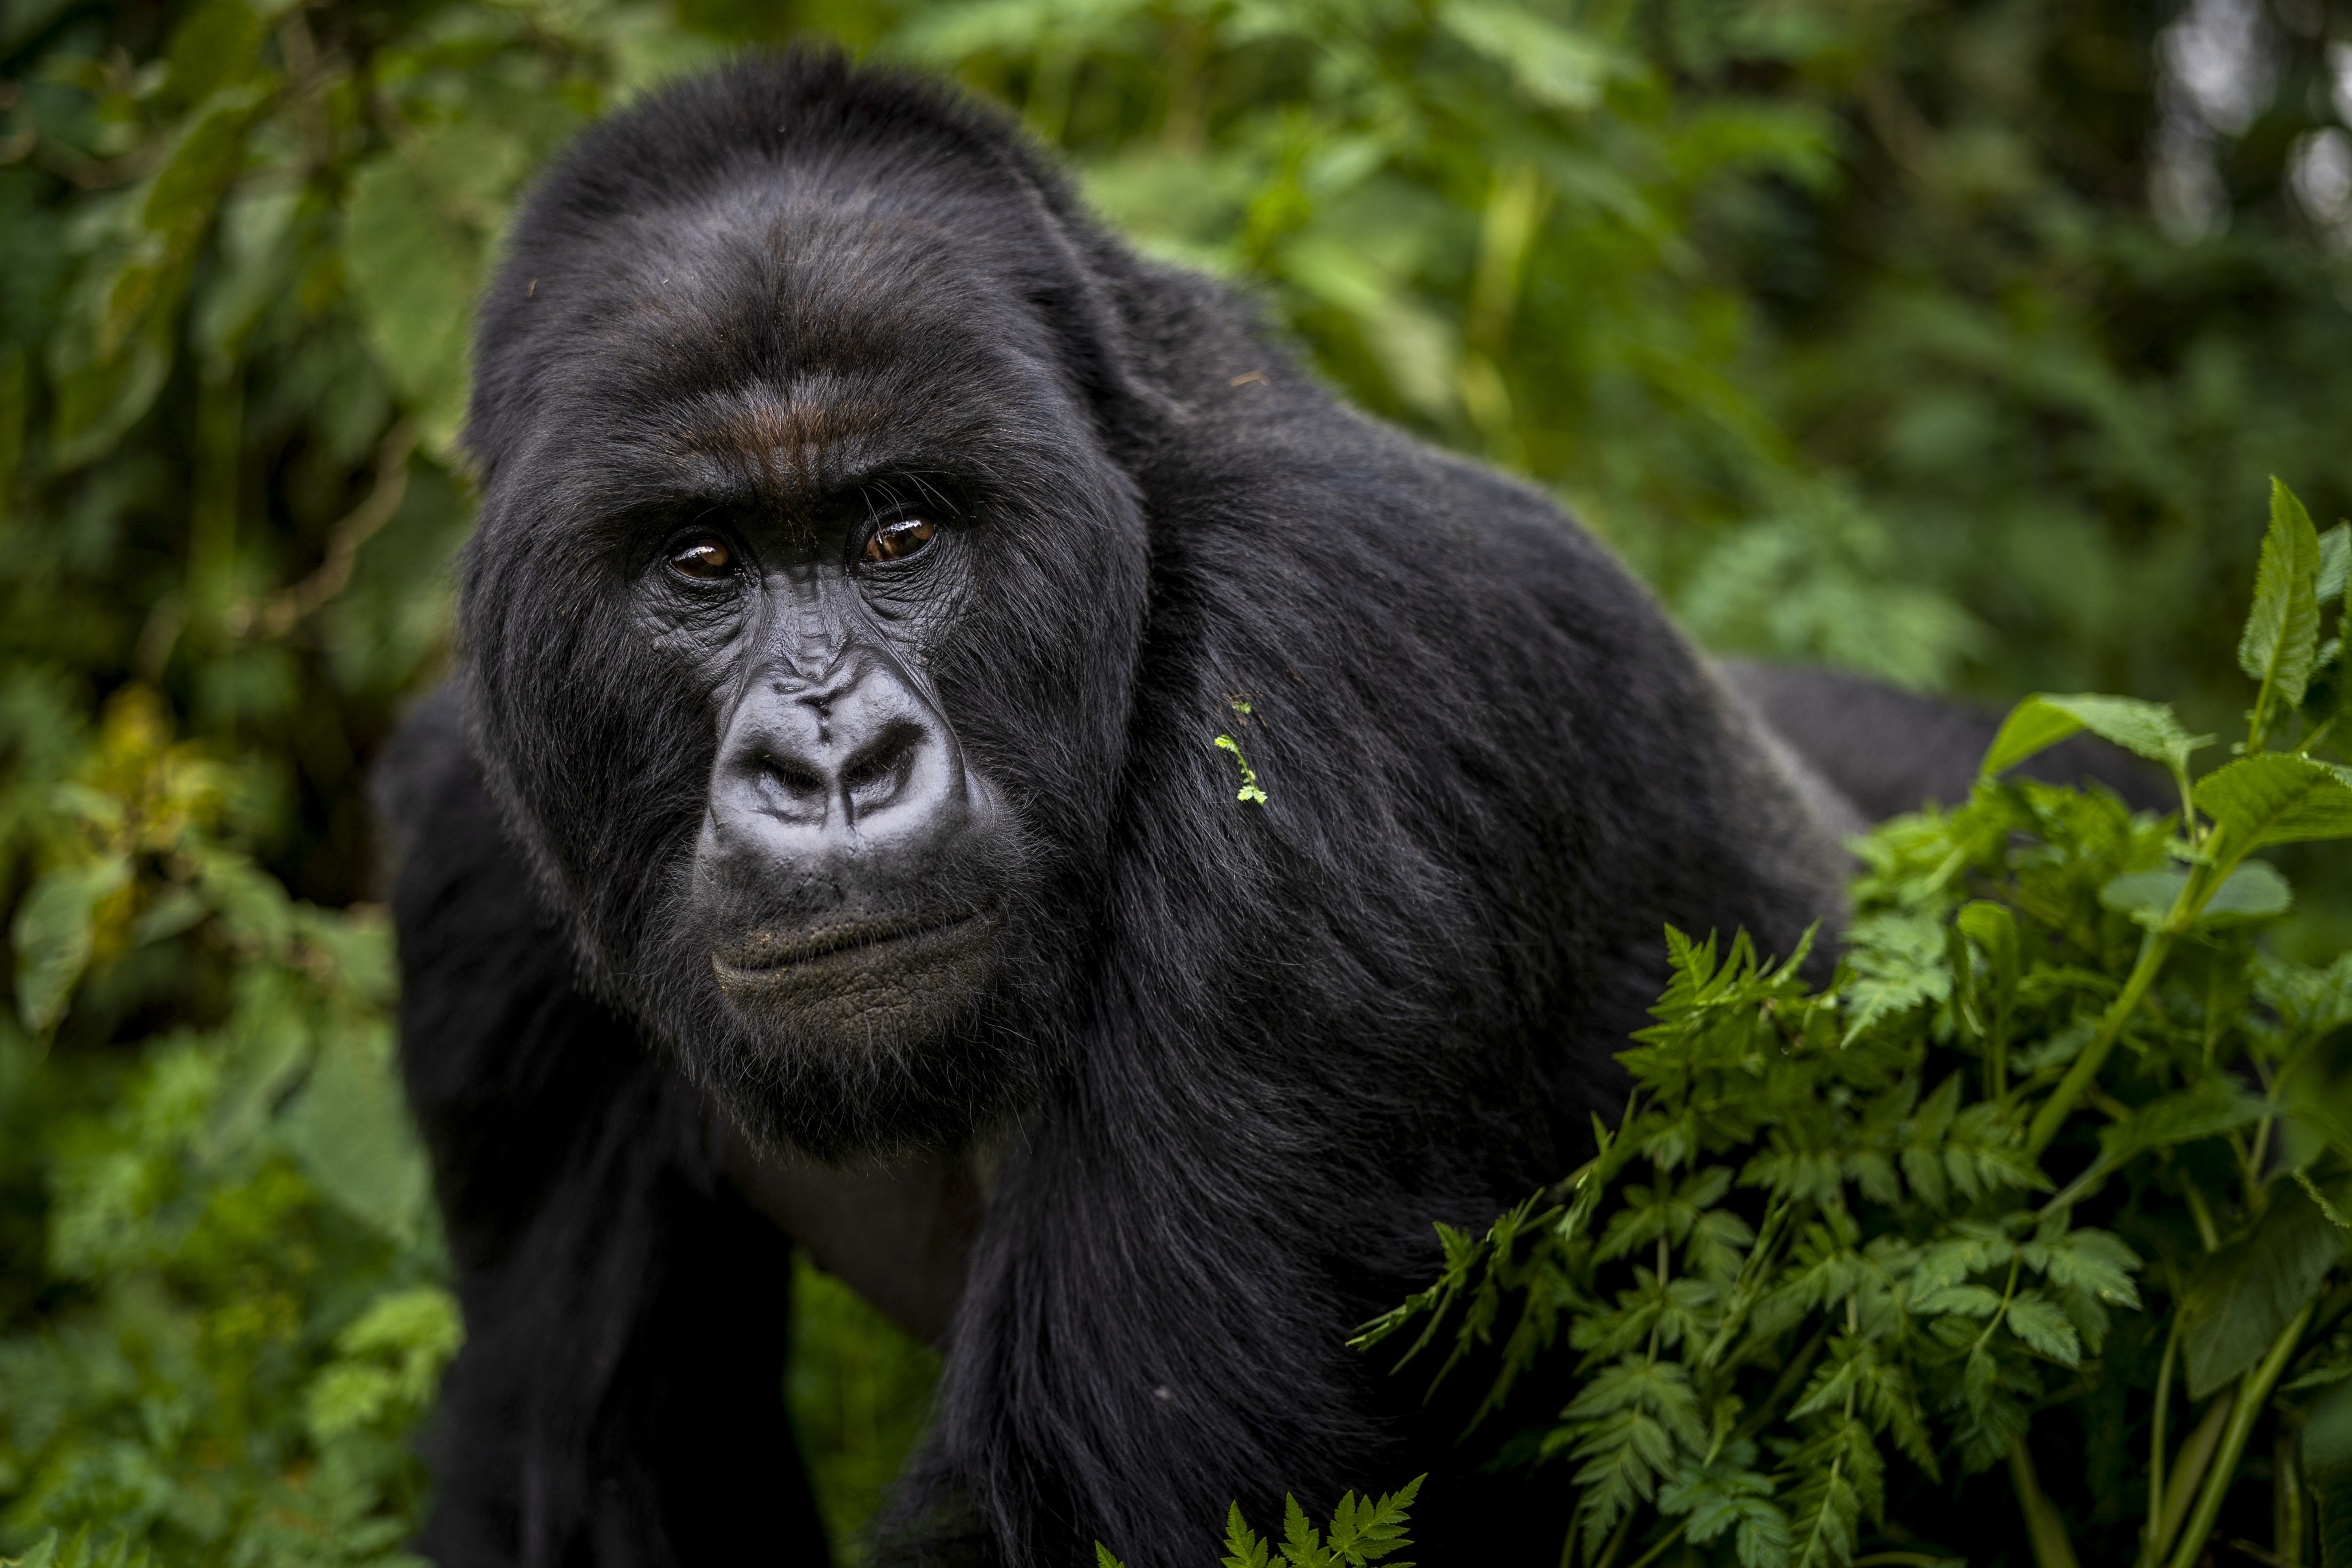 A mountain gorilla encounter got Jan Latta writing about endangered animals. Photo: AP